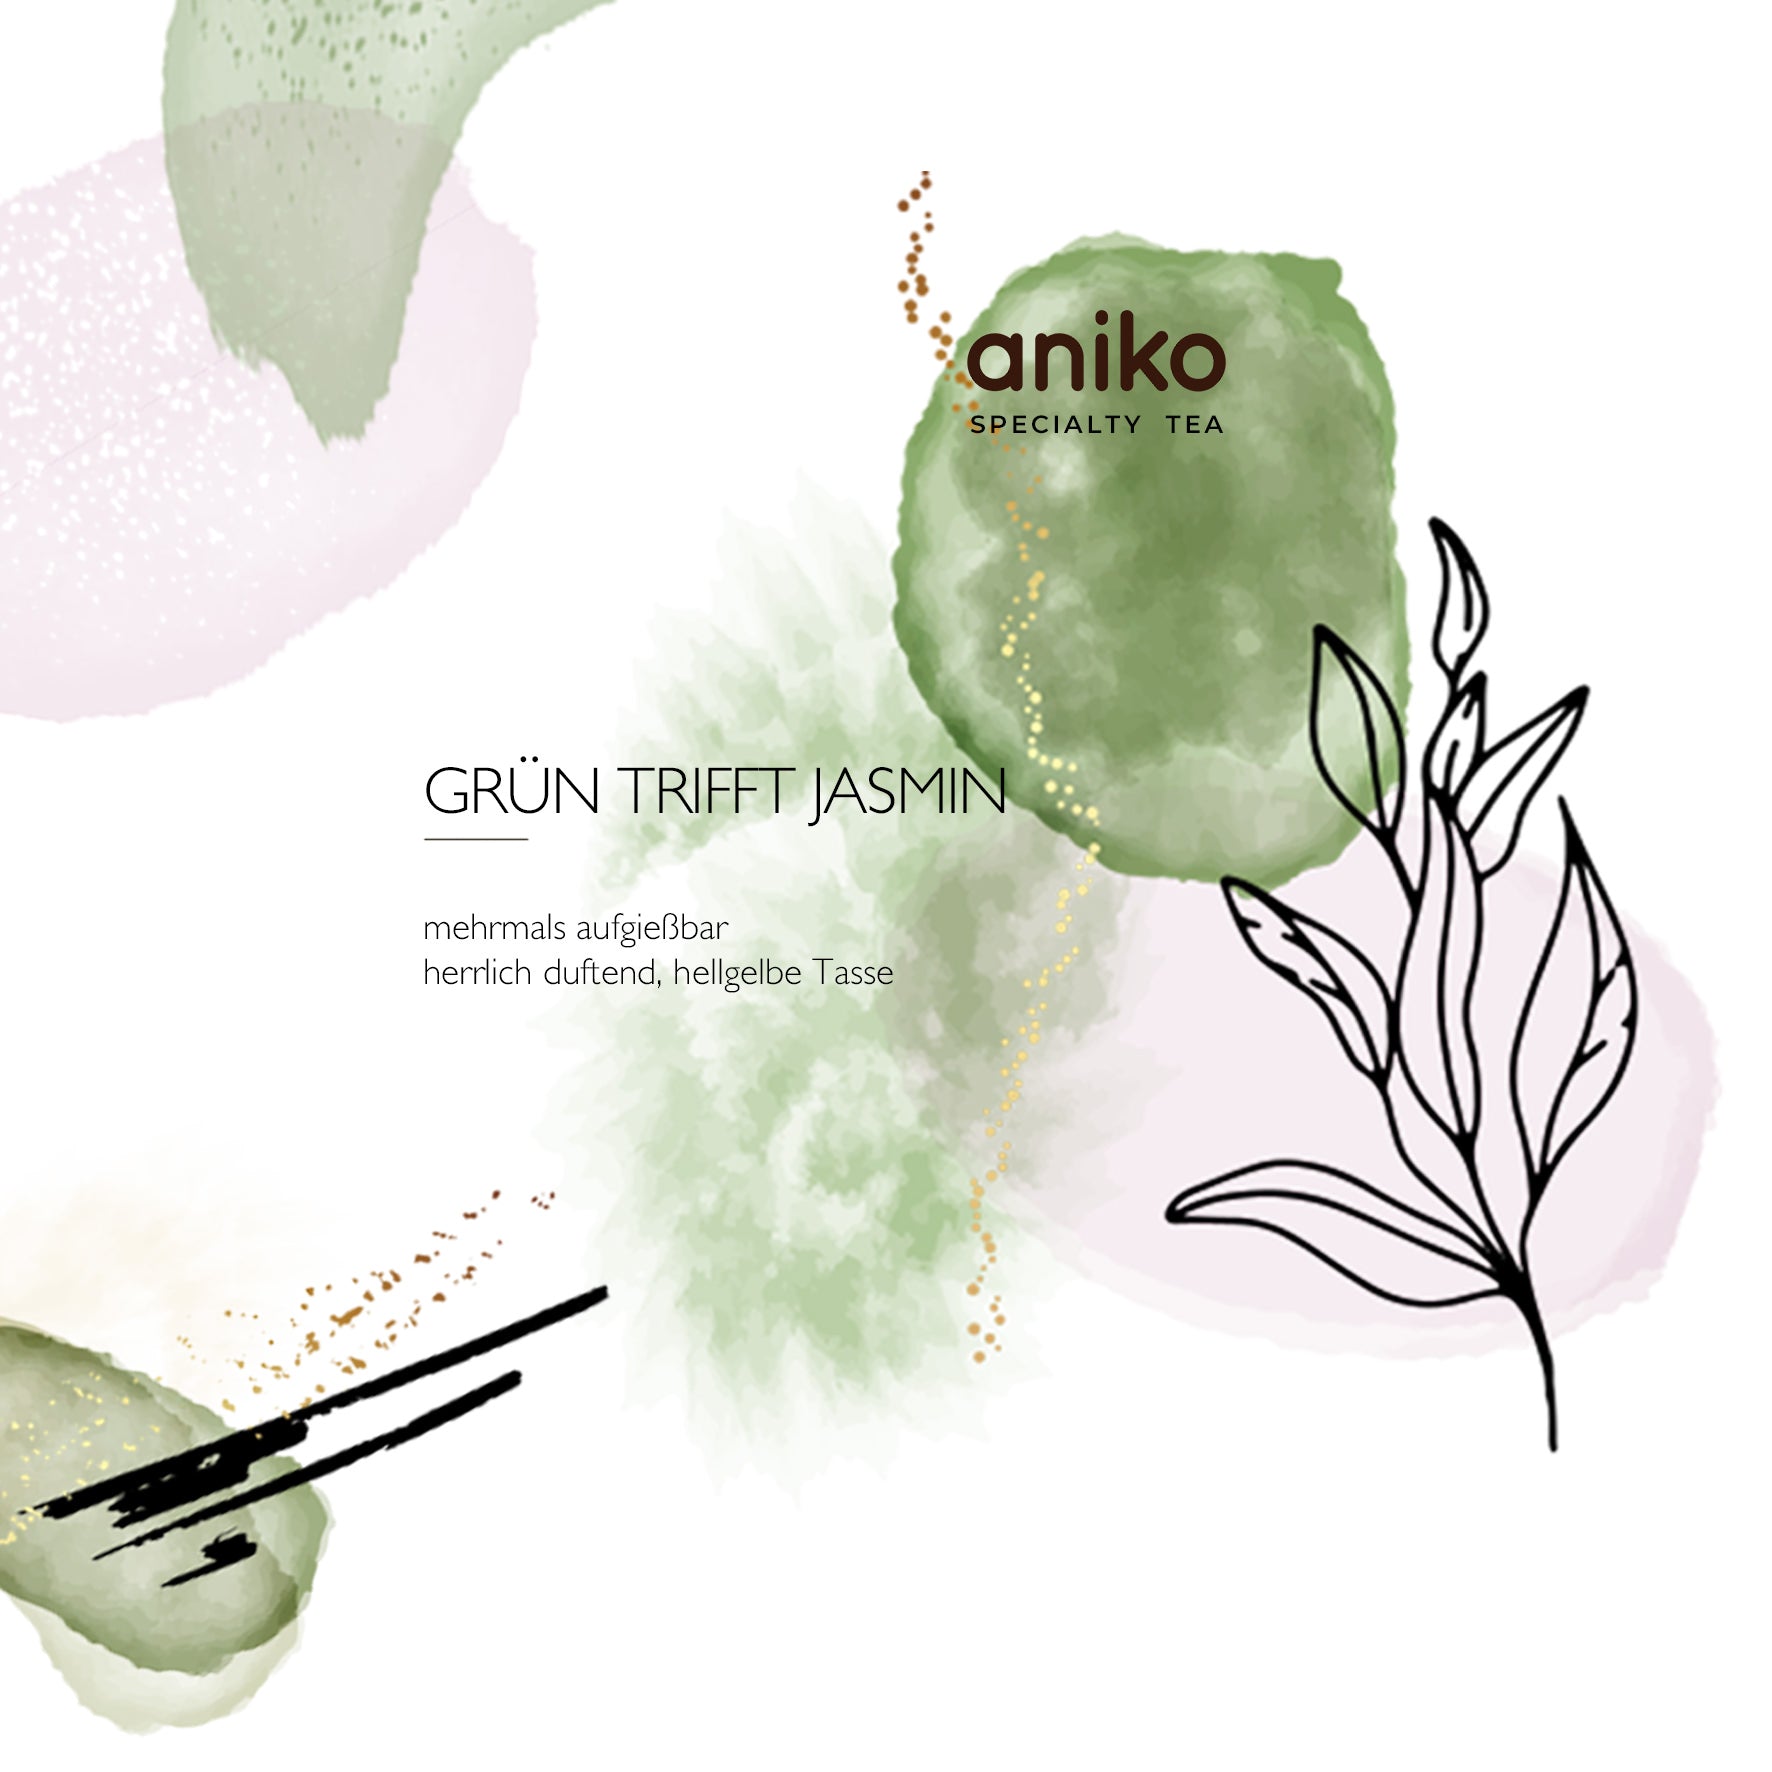 aniko Specialty Tea | Green Meets Jasmine